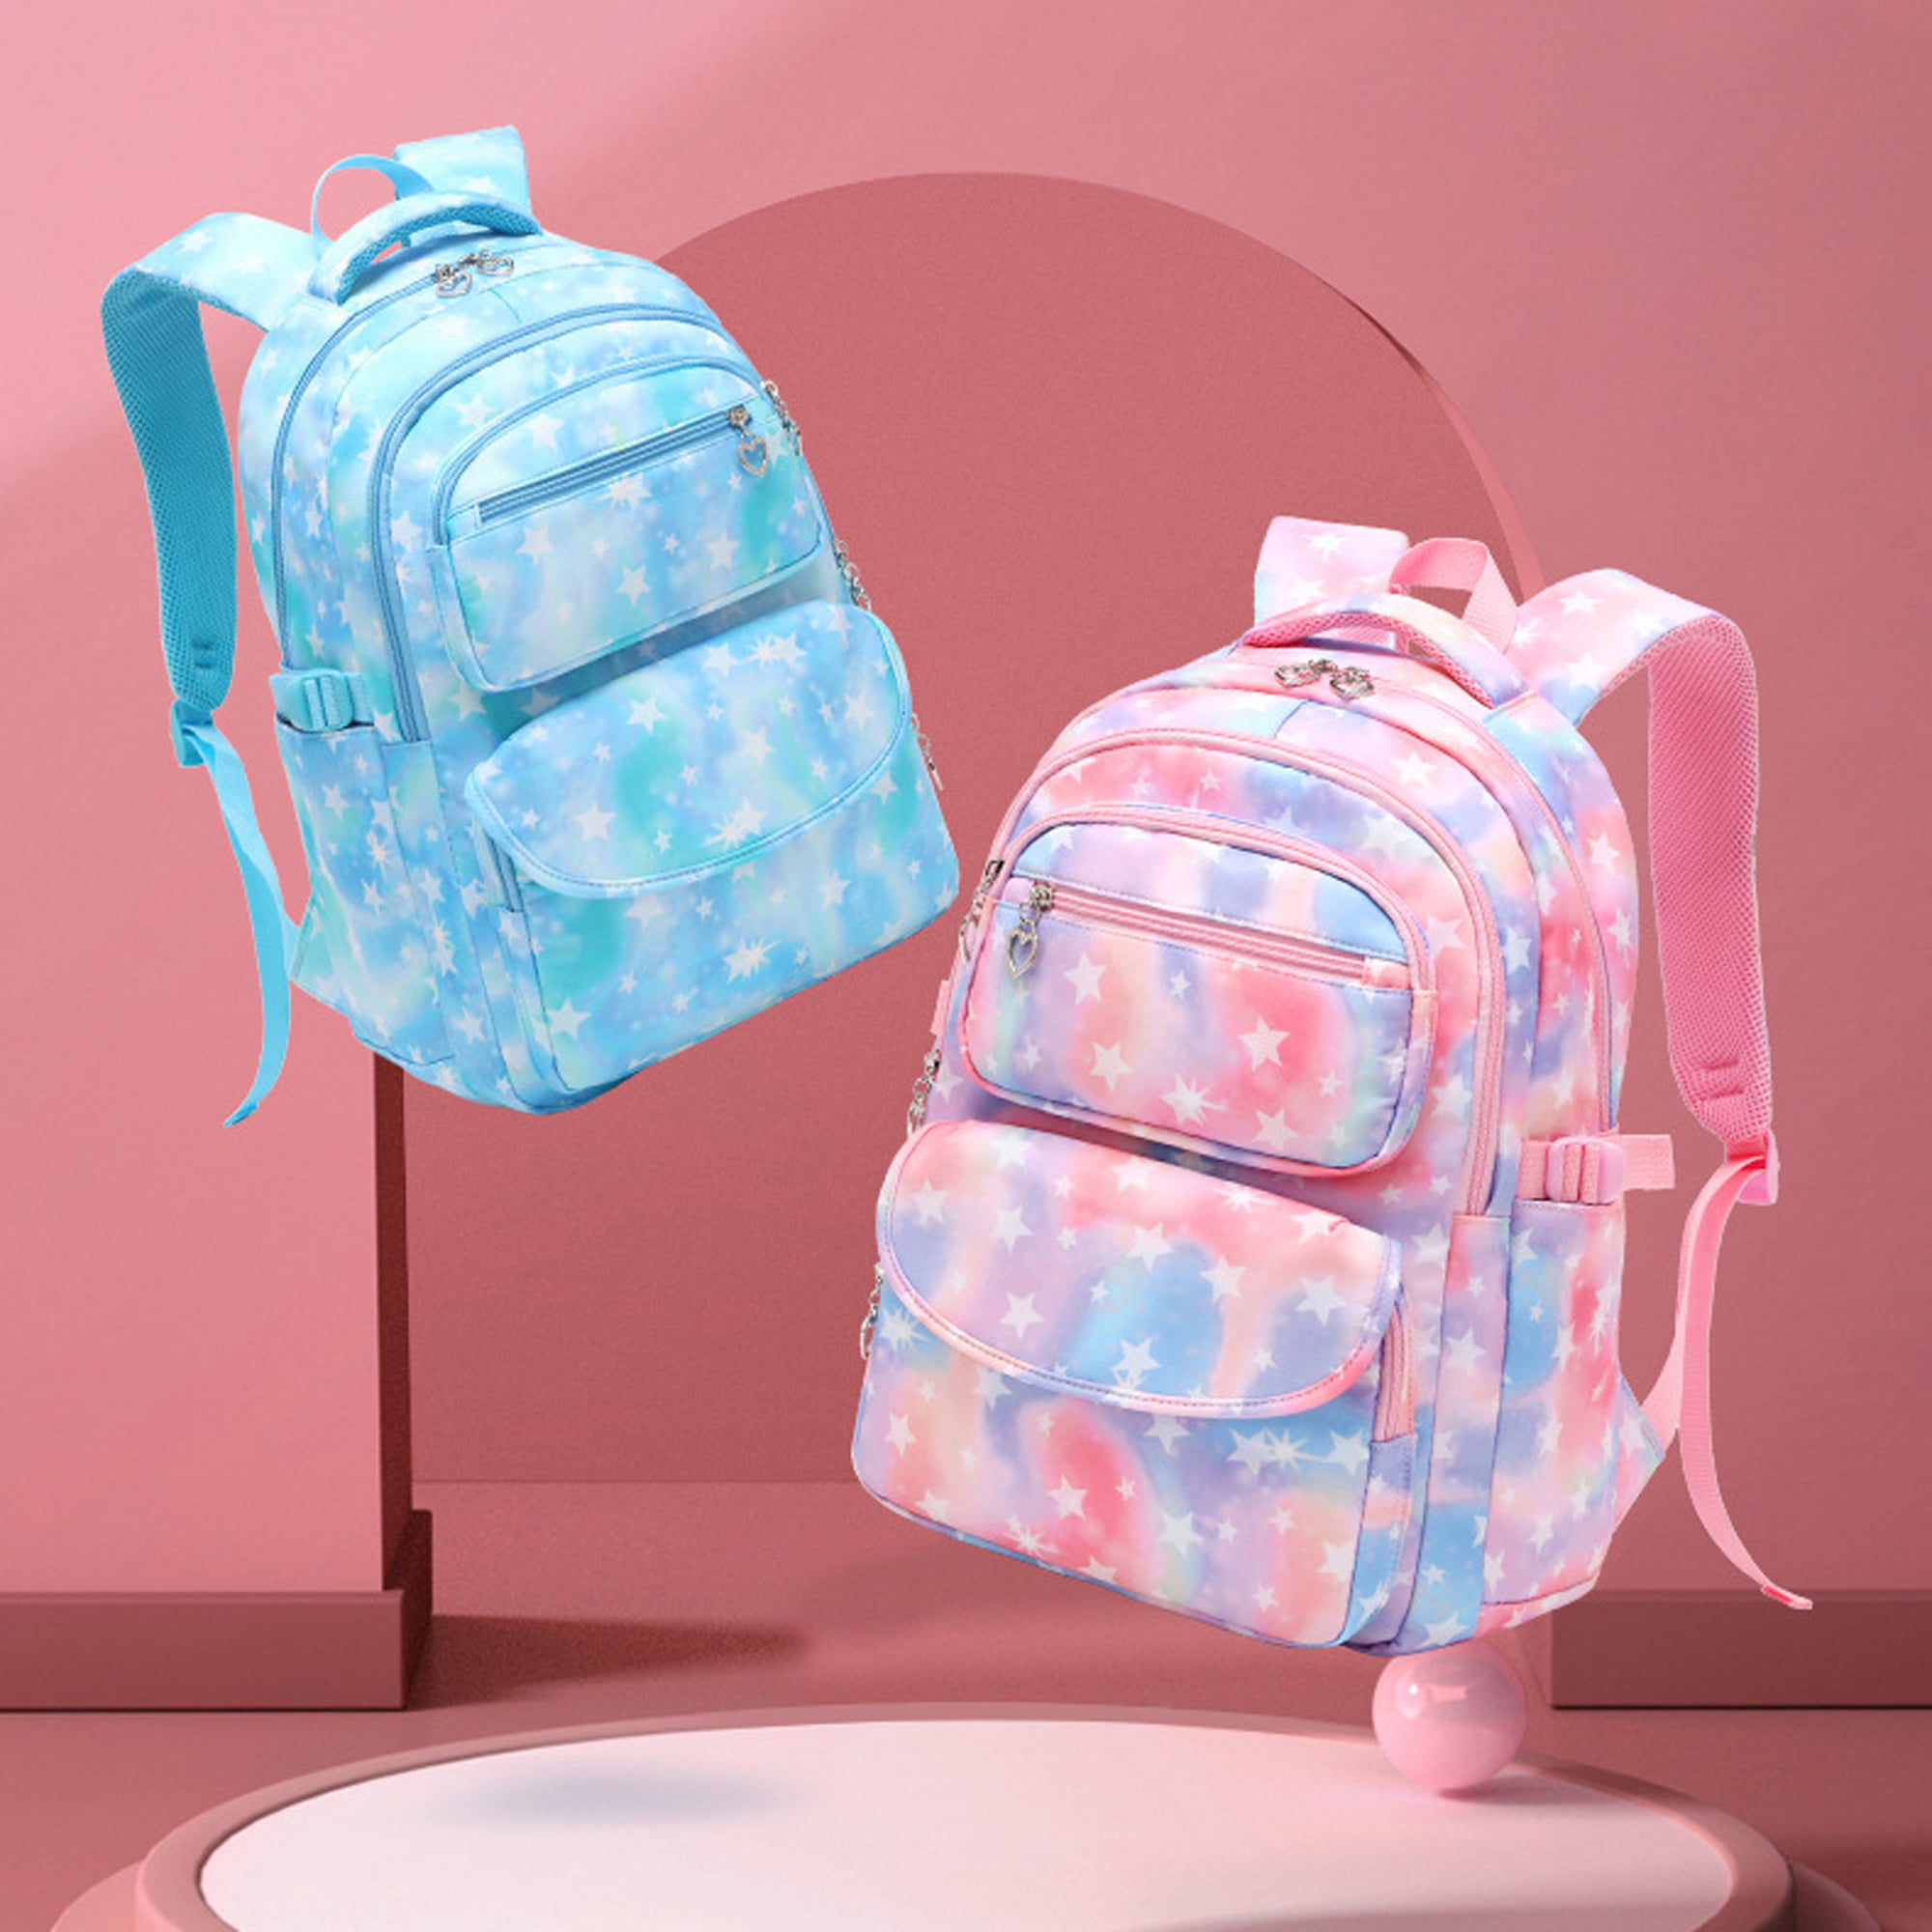 BLUEY 2 Piece Backpack Set, Pre-school Girls & Boys 16 Travel Bag, Blue